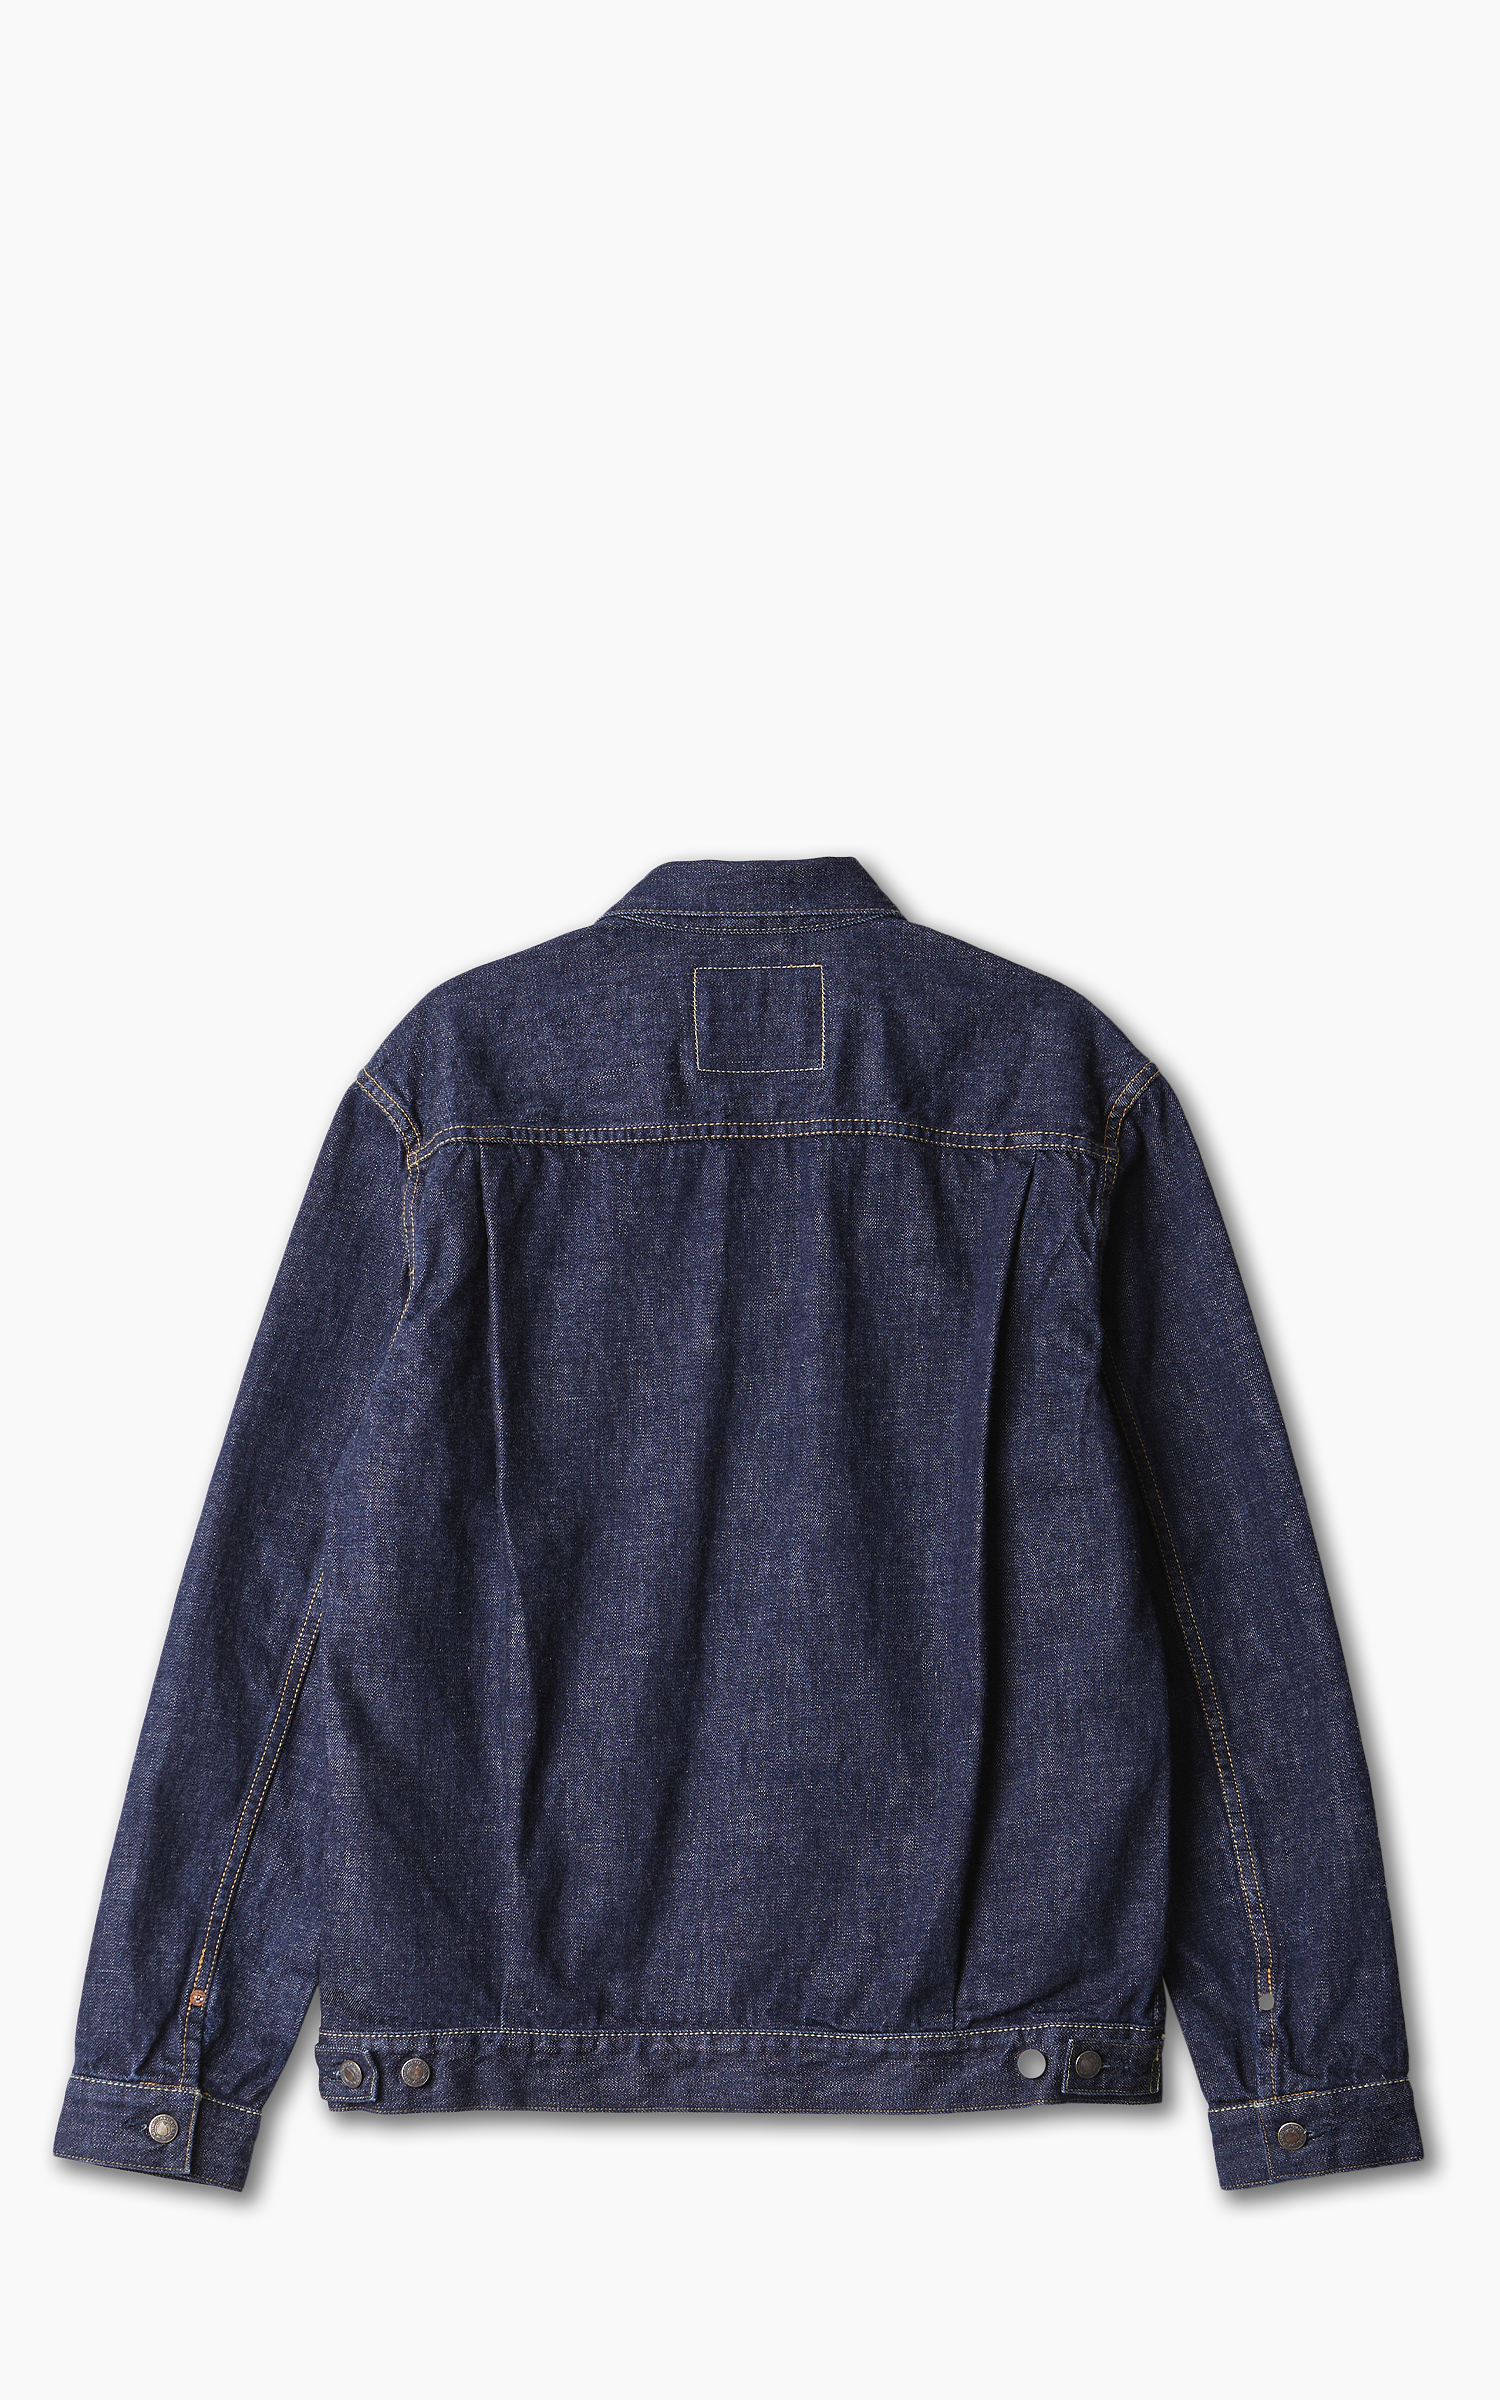 Momotaro Jeans MJ2003 Type 2 Denim Jacket Copper Label Rinsed | Cultizm